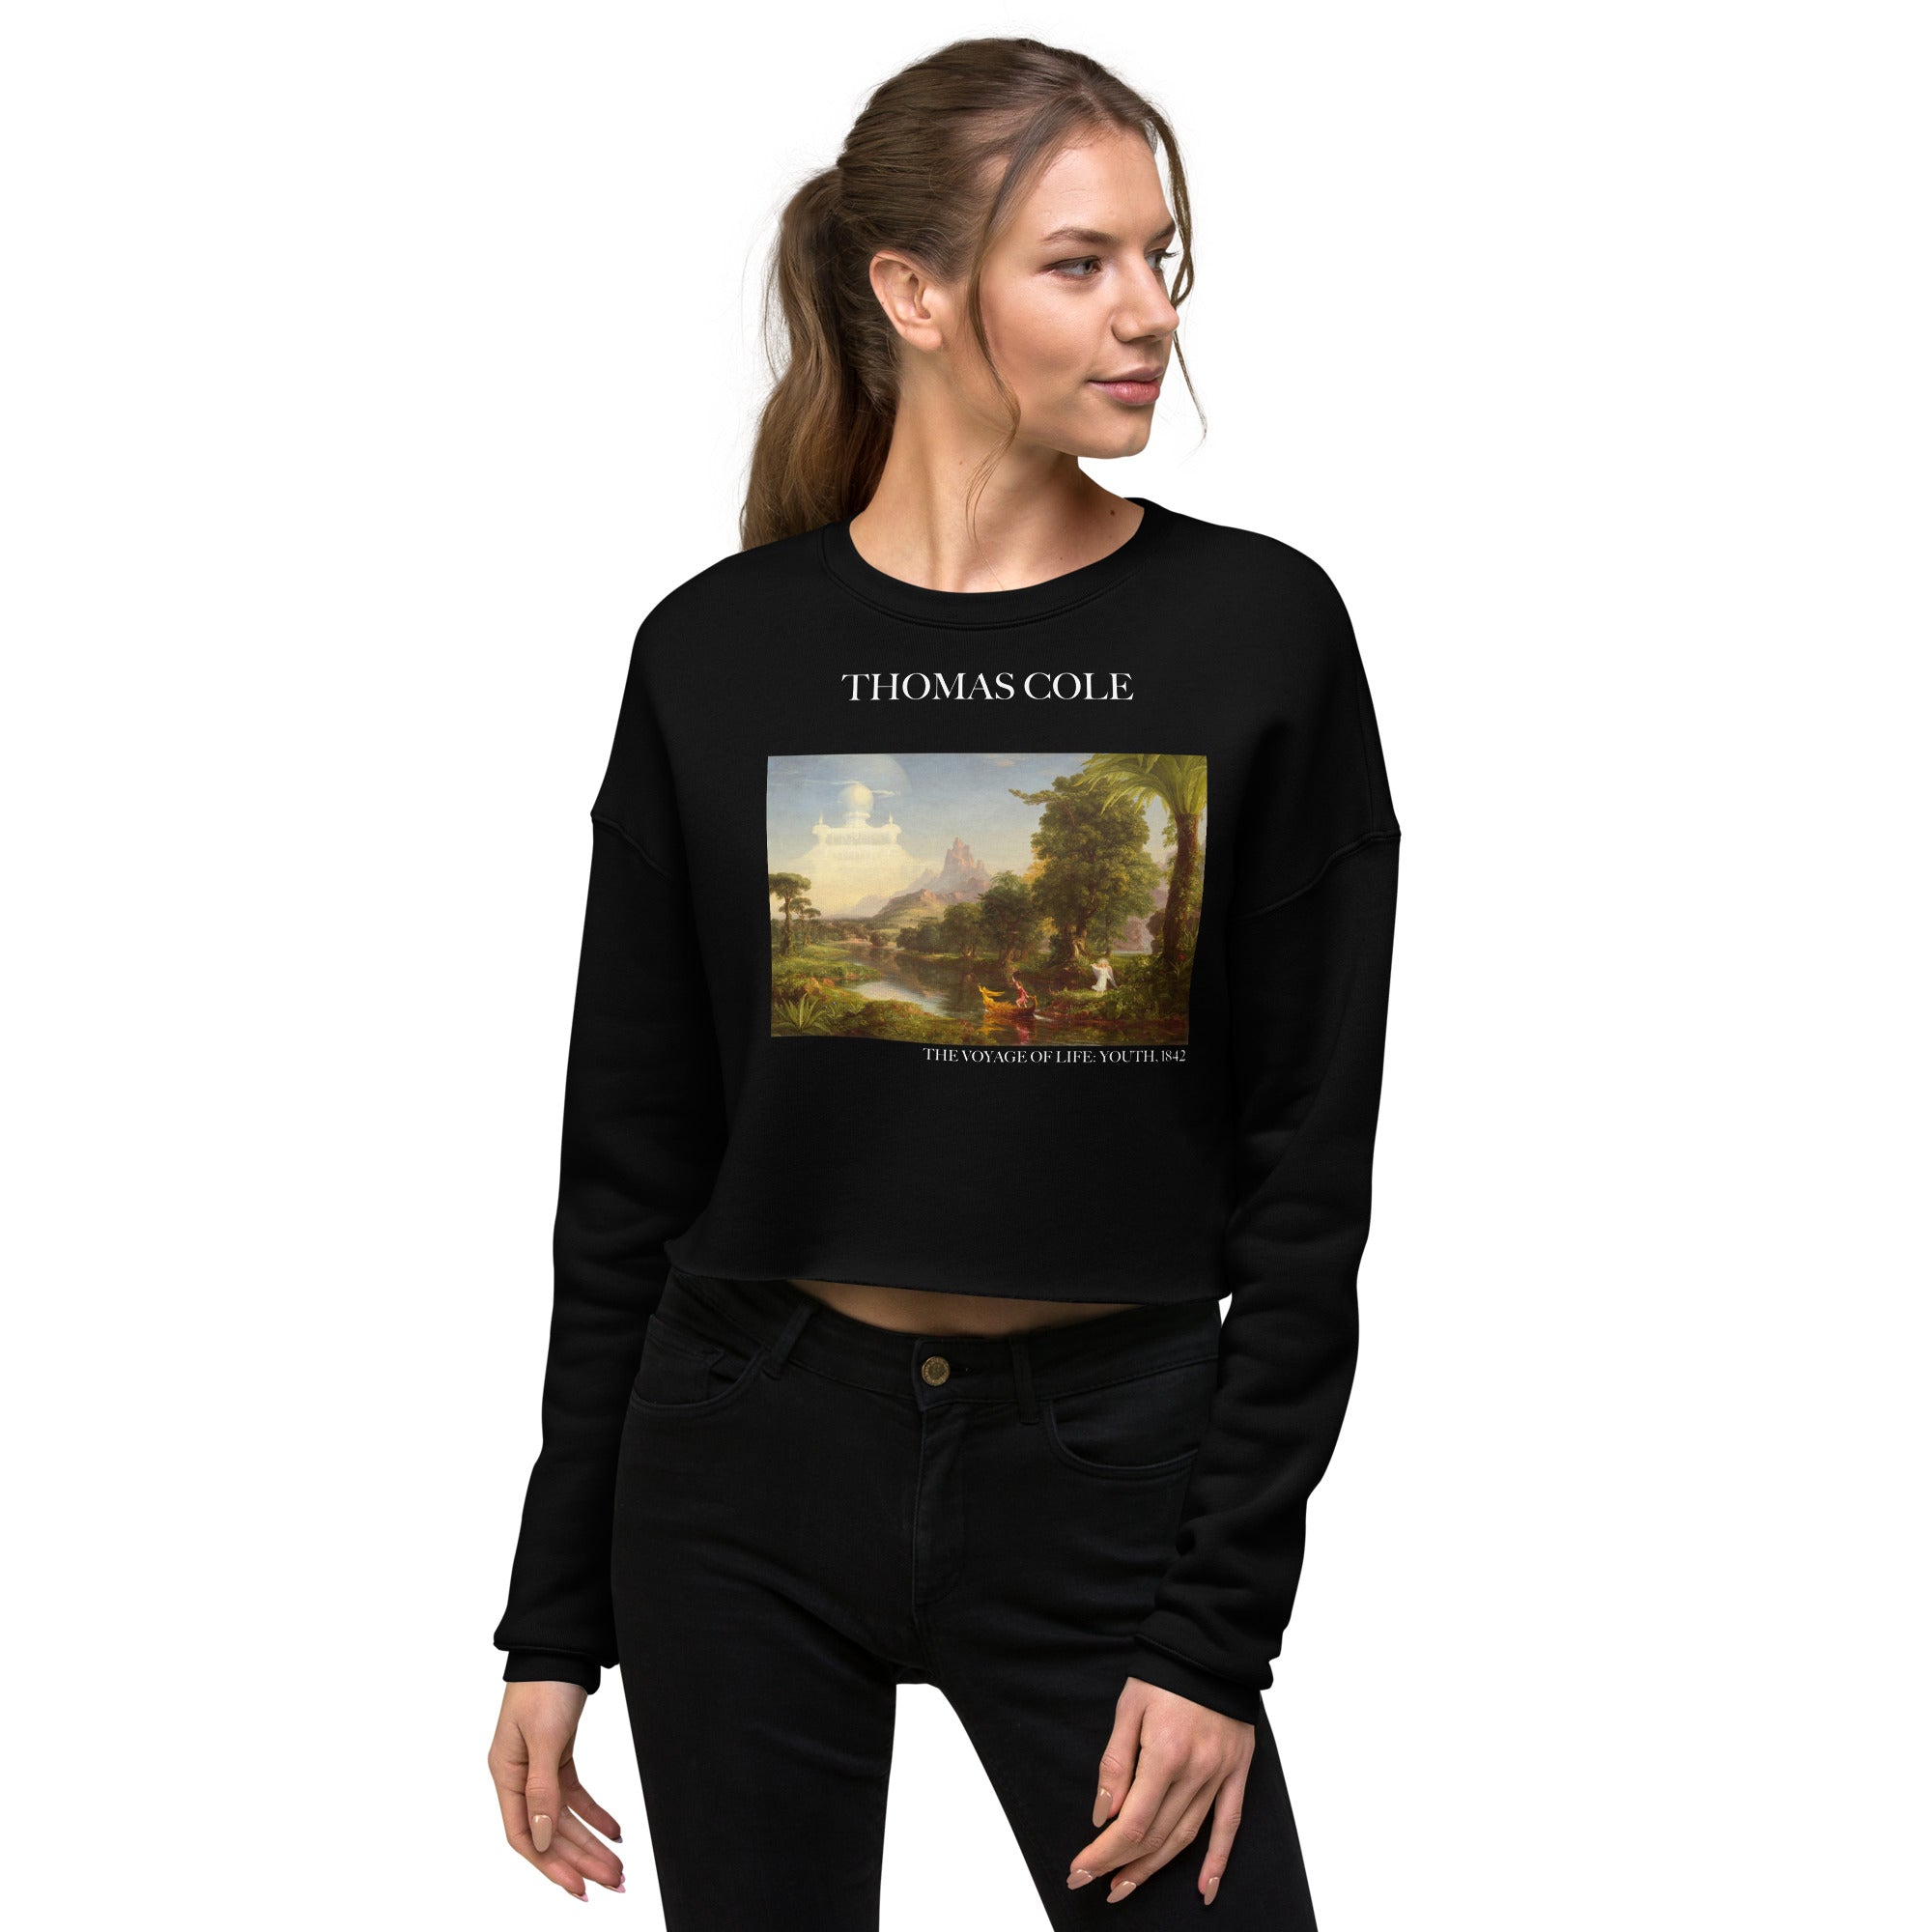 Thomas Cole 'Die Reise des Lebens: Jugend' Berühmtes Gemälde Kurzes Sweatshirt | Premium Art Kurzes Sweatshirt